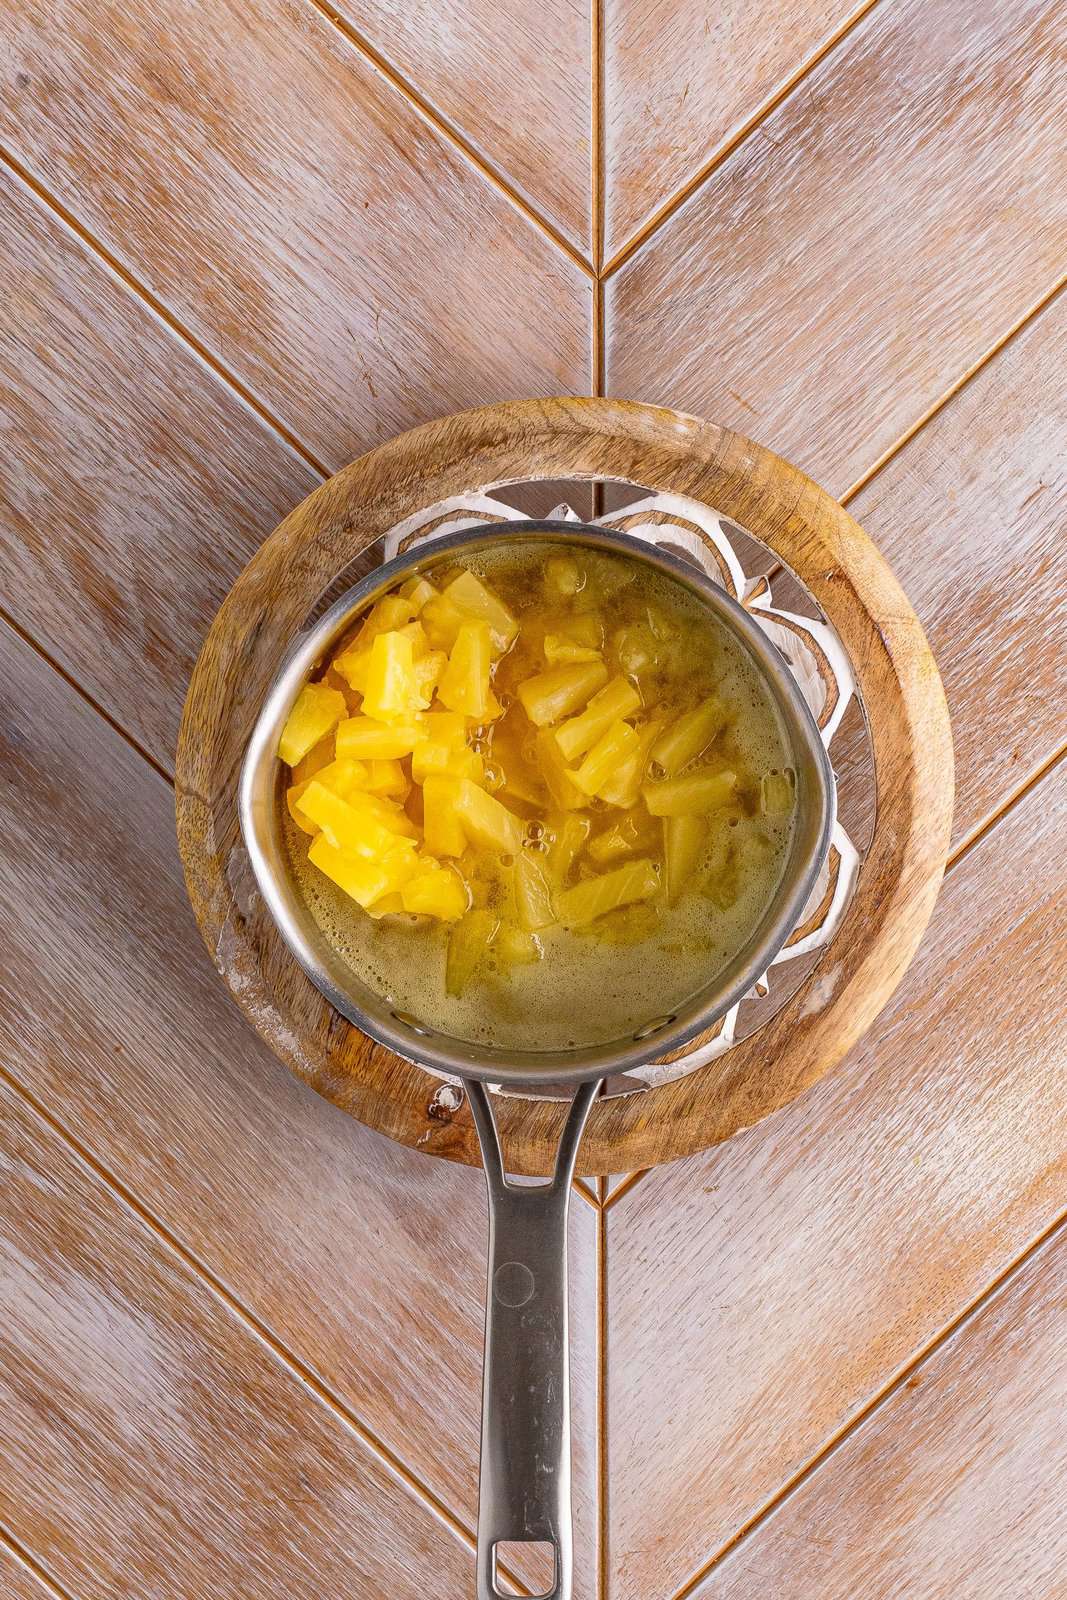 pineapple tidbits added to sauce pan. 